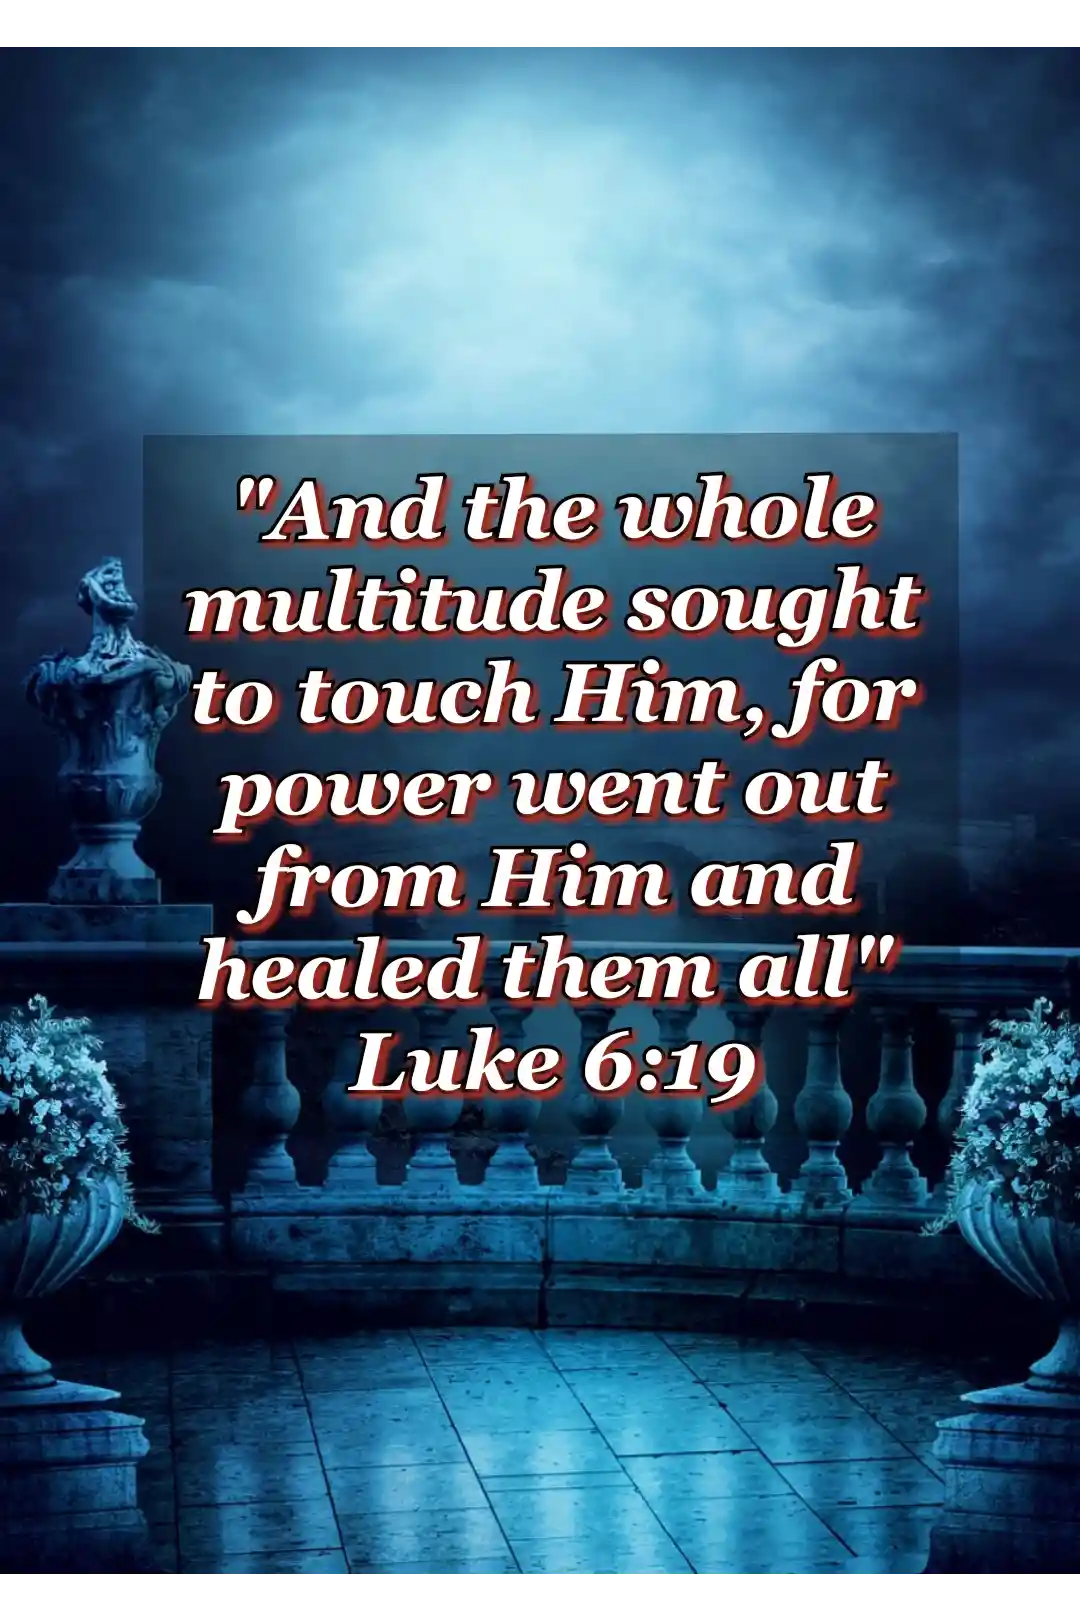 bible verses wallpaper about healing (Luke 6:19)